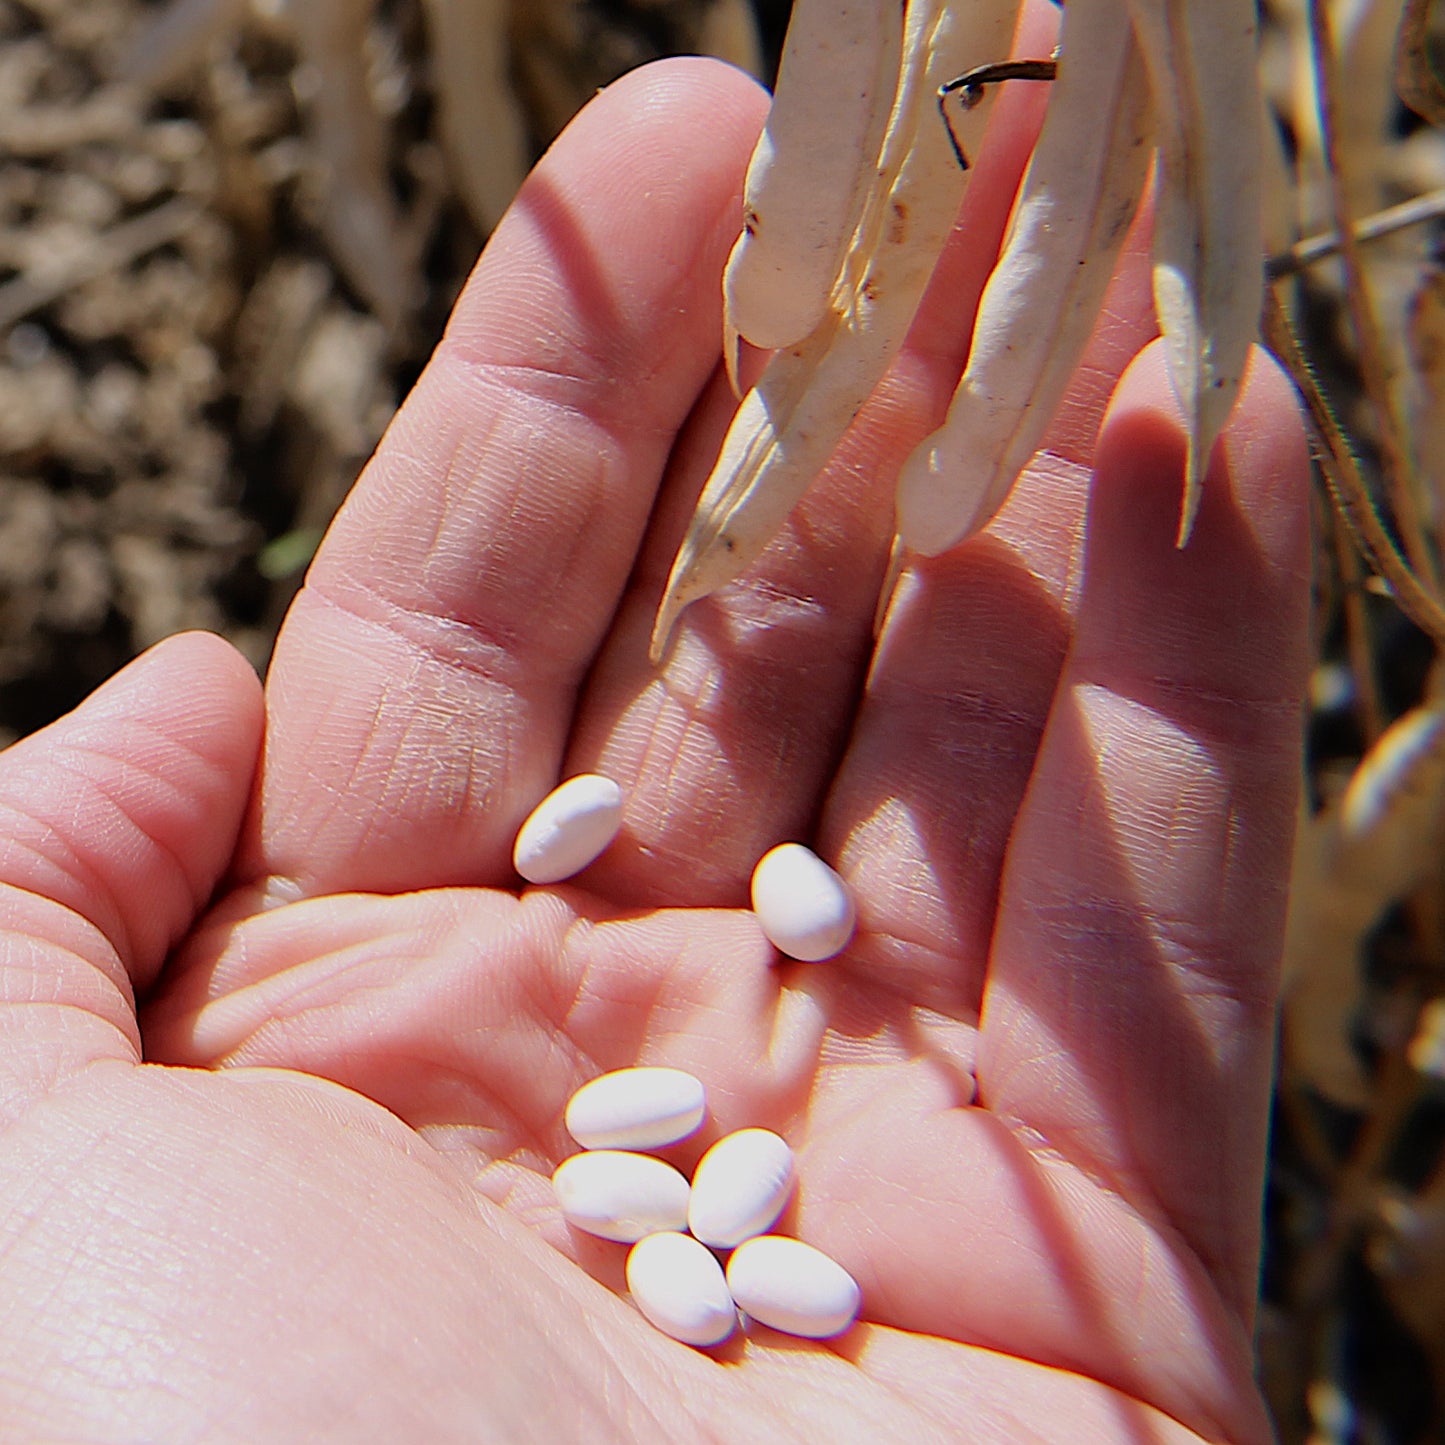 Navy Beans // Michigan Grown, USDA Organic Certified, Non-GMO